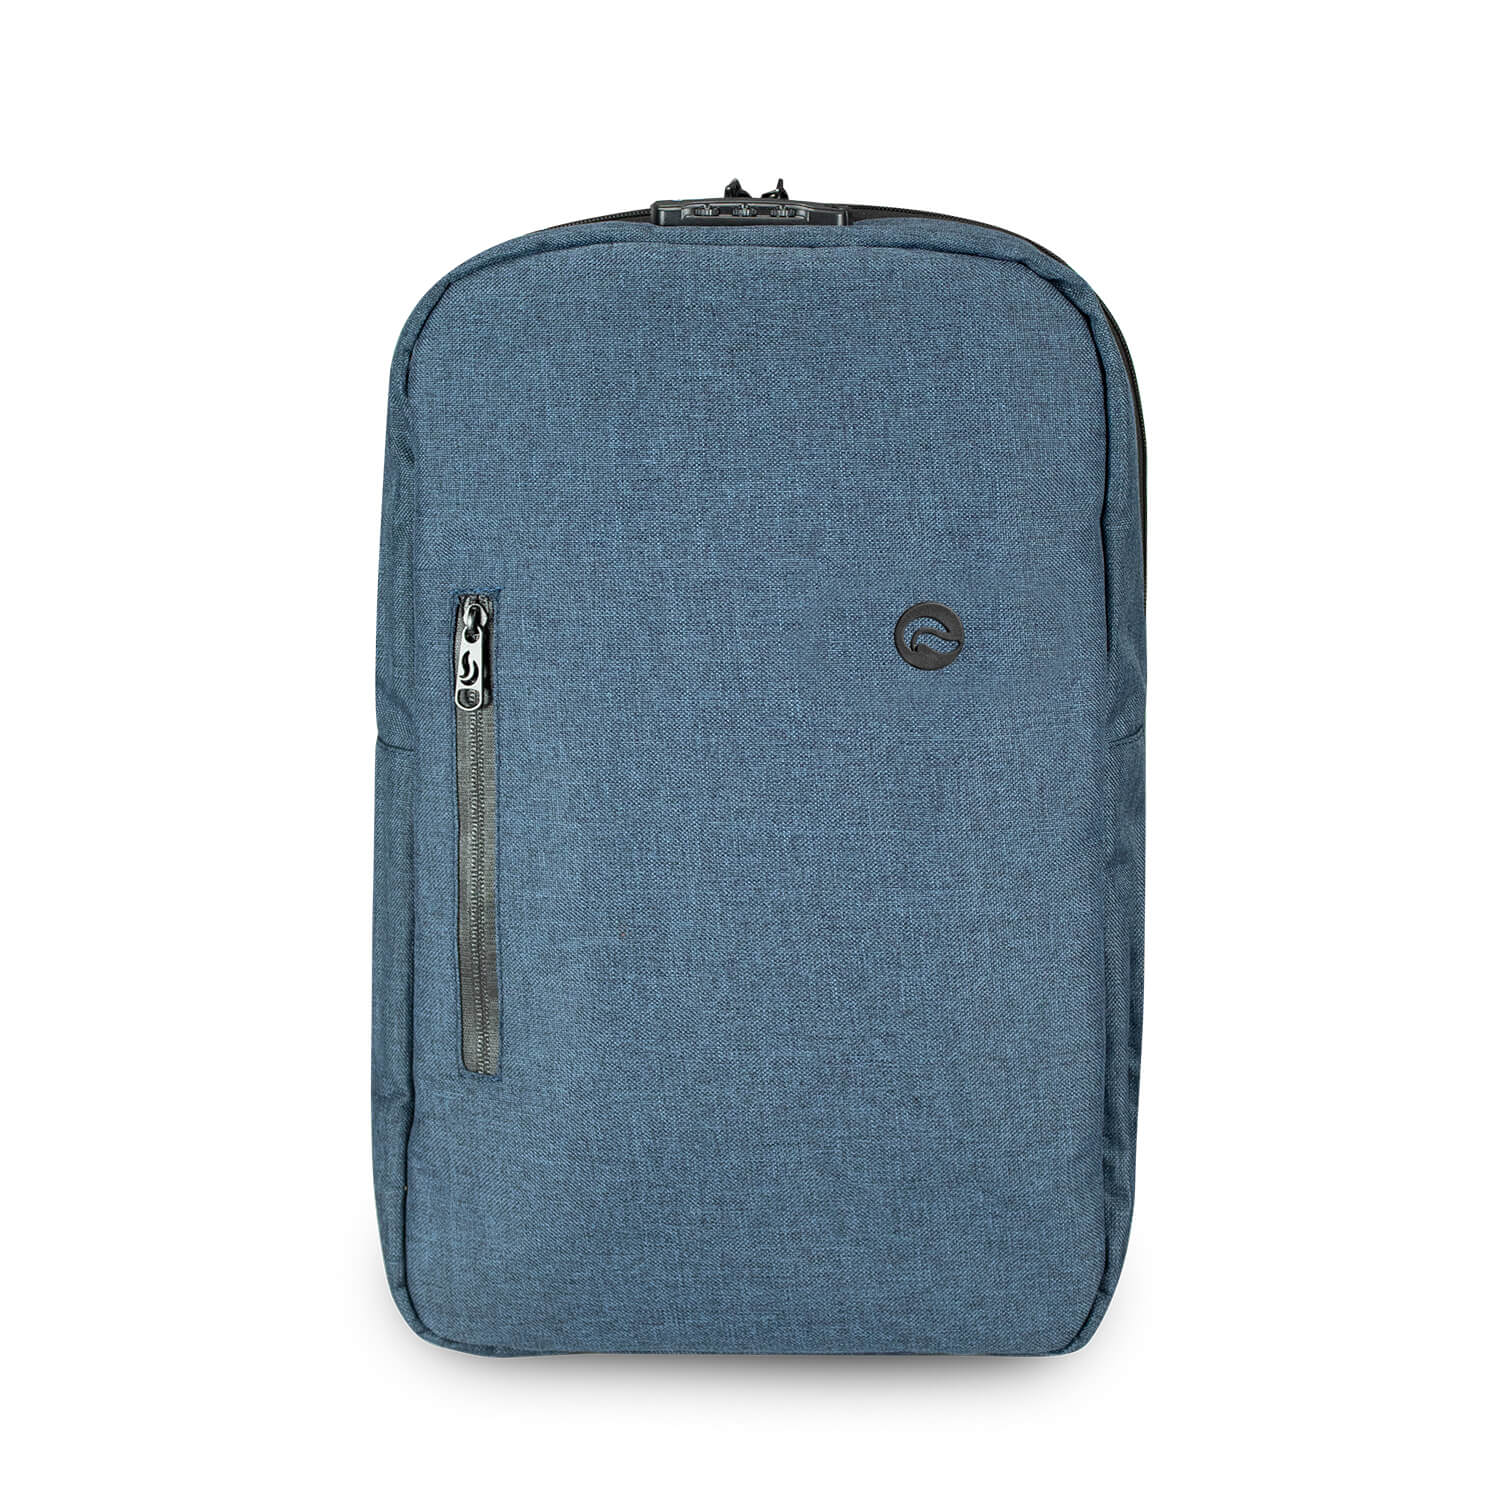  Vatra Fly Bag Meta Vape Case Portable E Cig Carrying